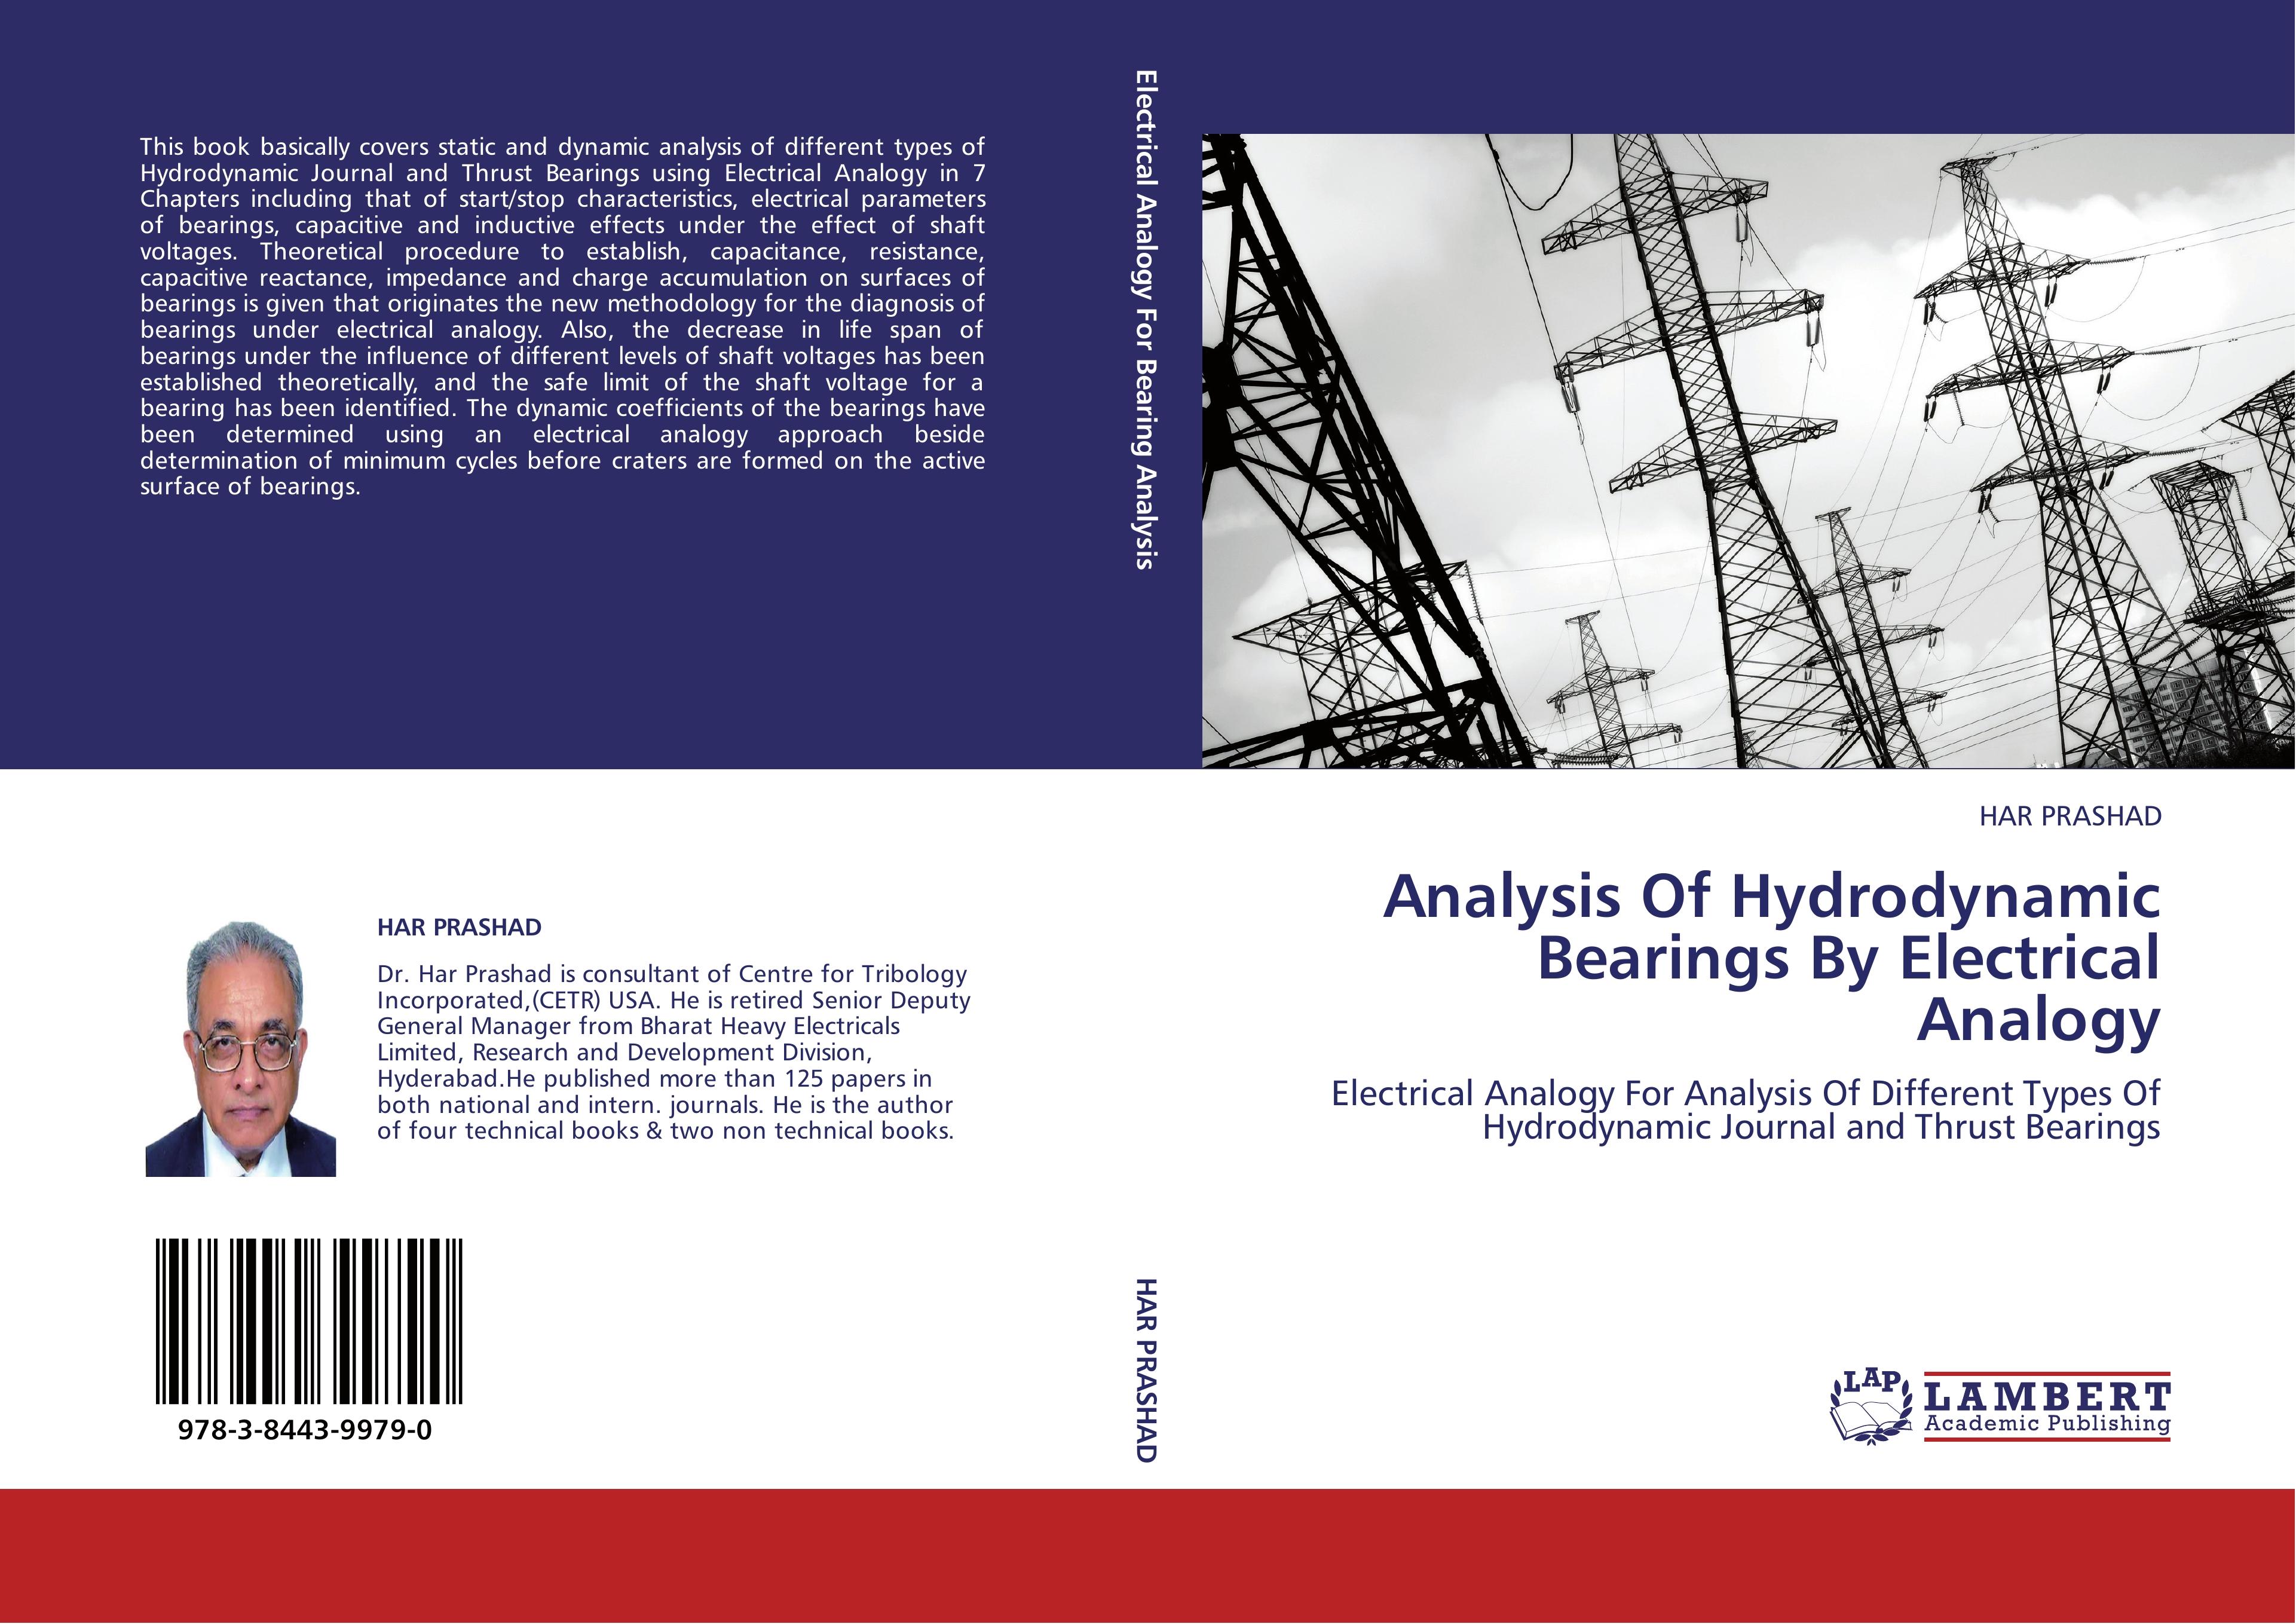 Analysis Of Hydrodynamic Bearings By Electrical Analogy - HAR PRASHAD